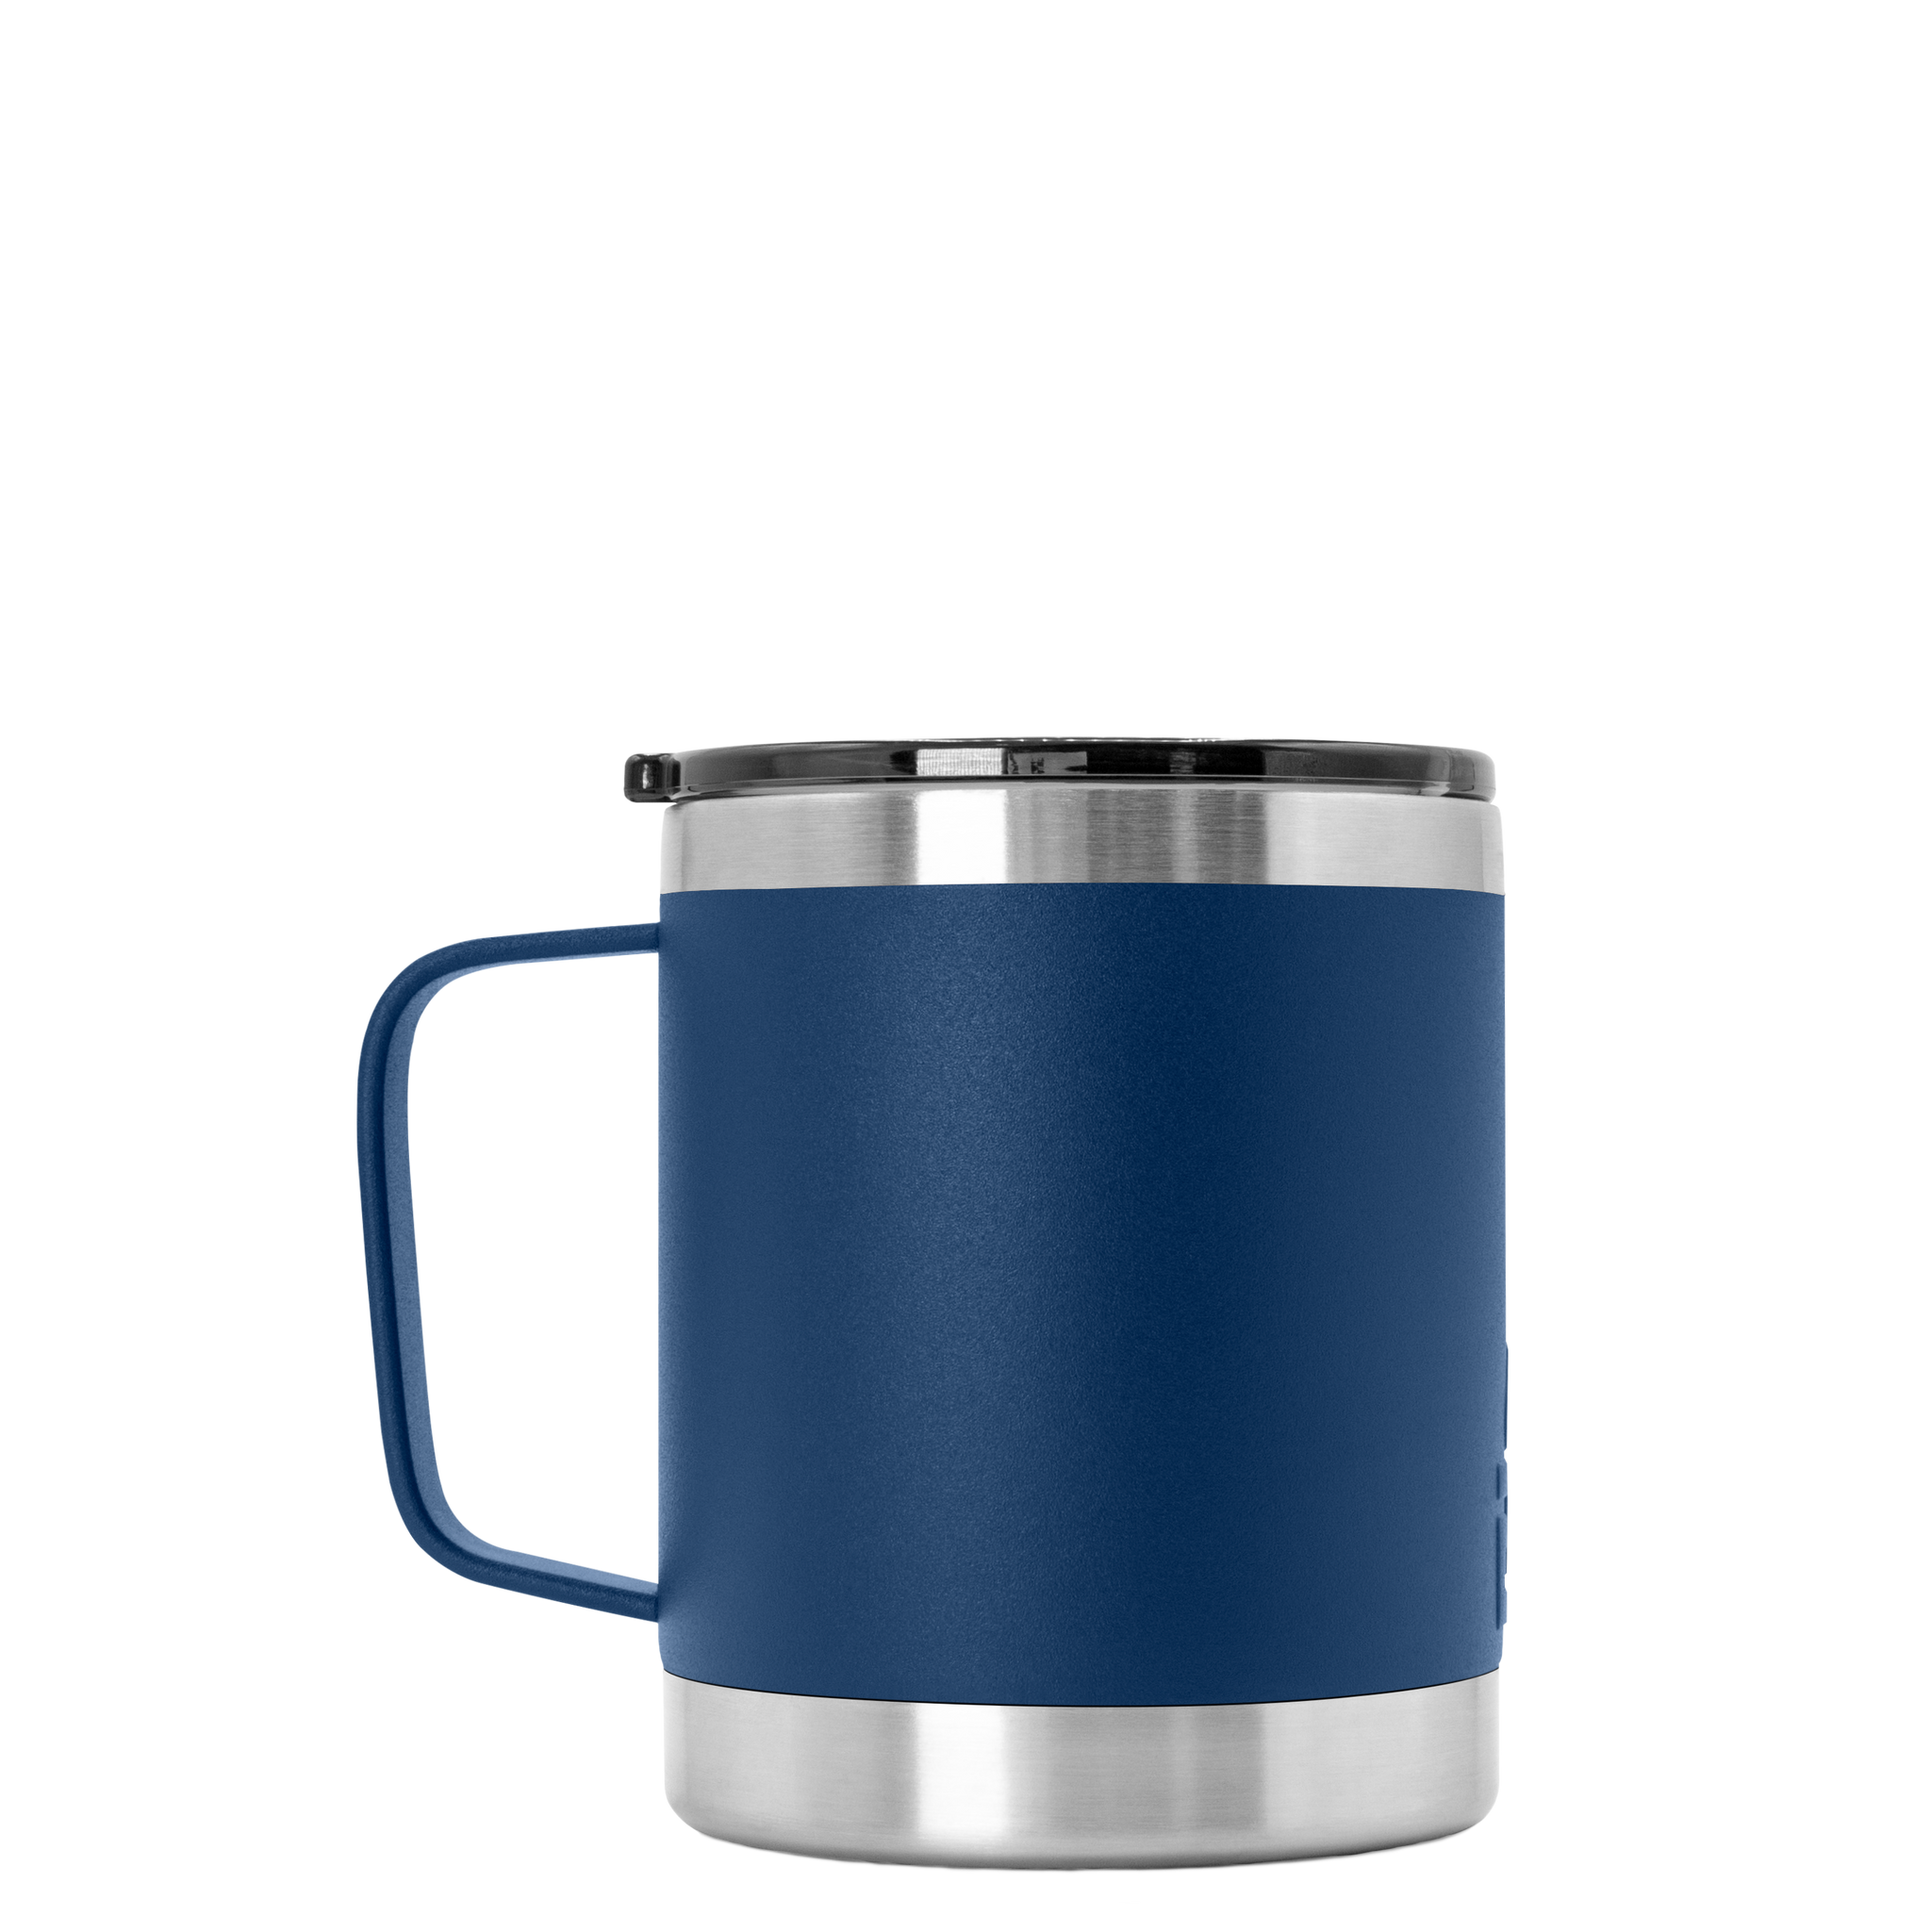 12 OZ Travel Mug Coffee Cup Stainless Steel Coffee Mug With Handle